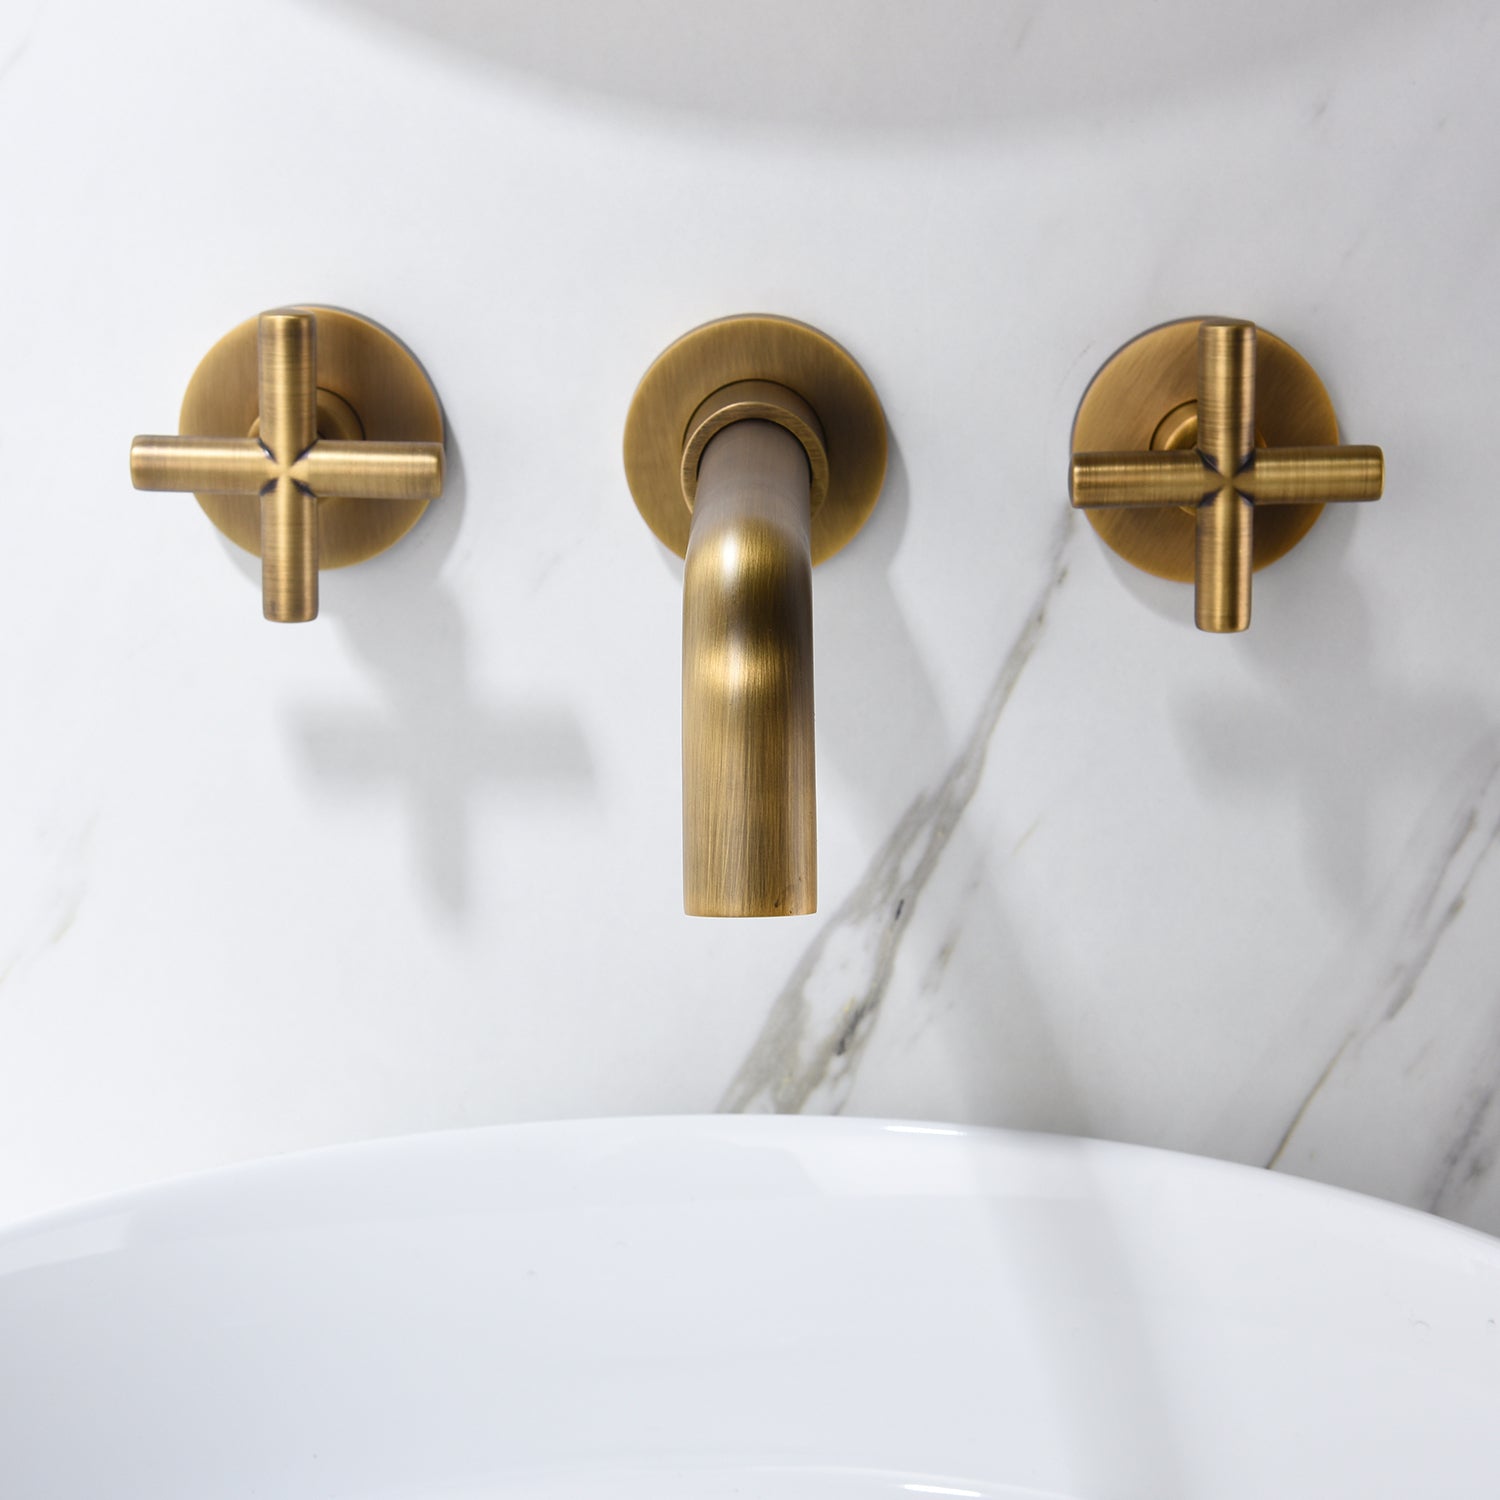 Bathroom Faucet Wall Mounted Bathroom Sink Faucet - Bronze